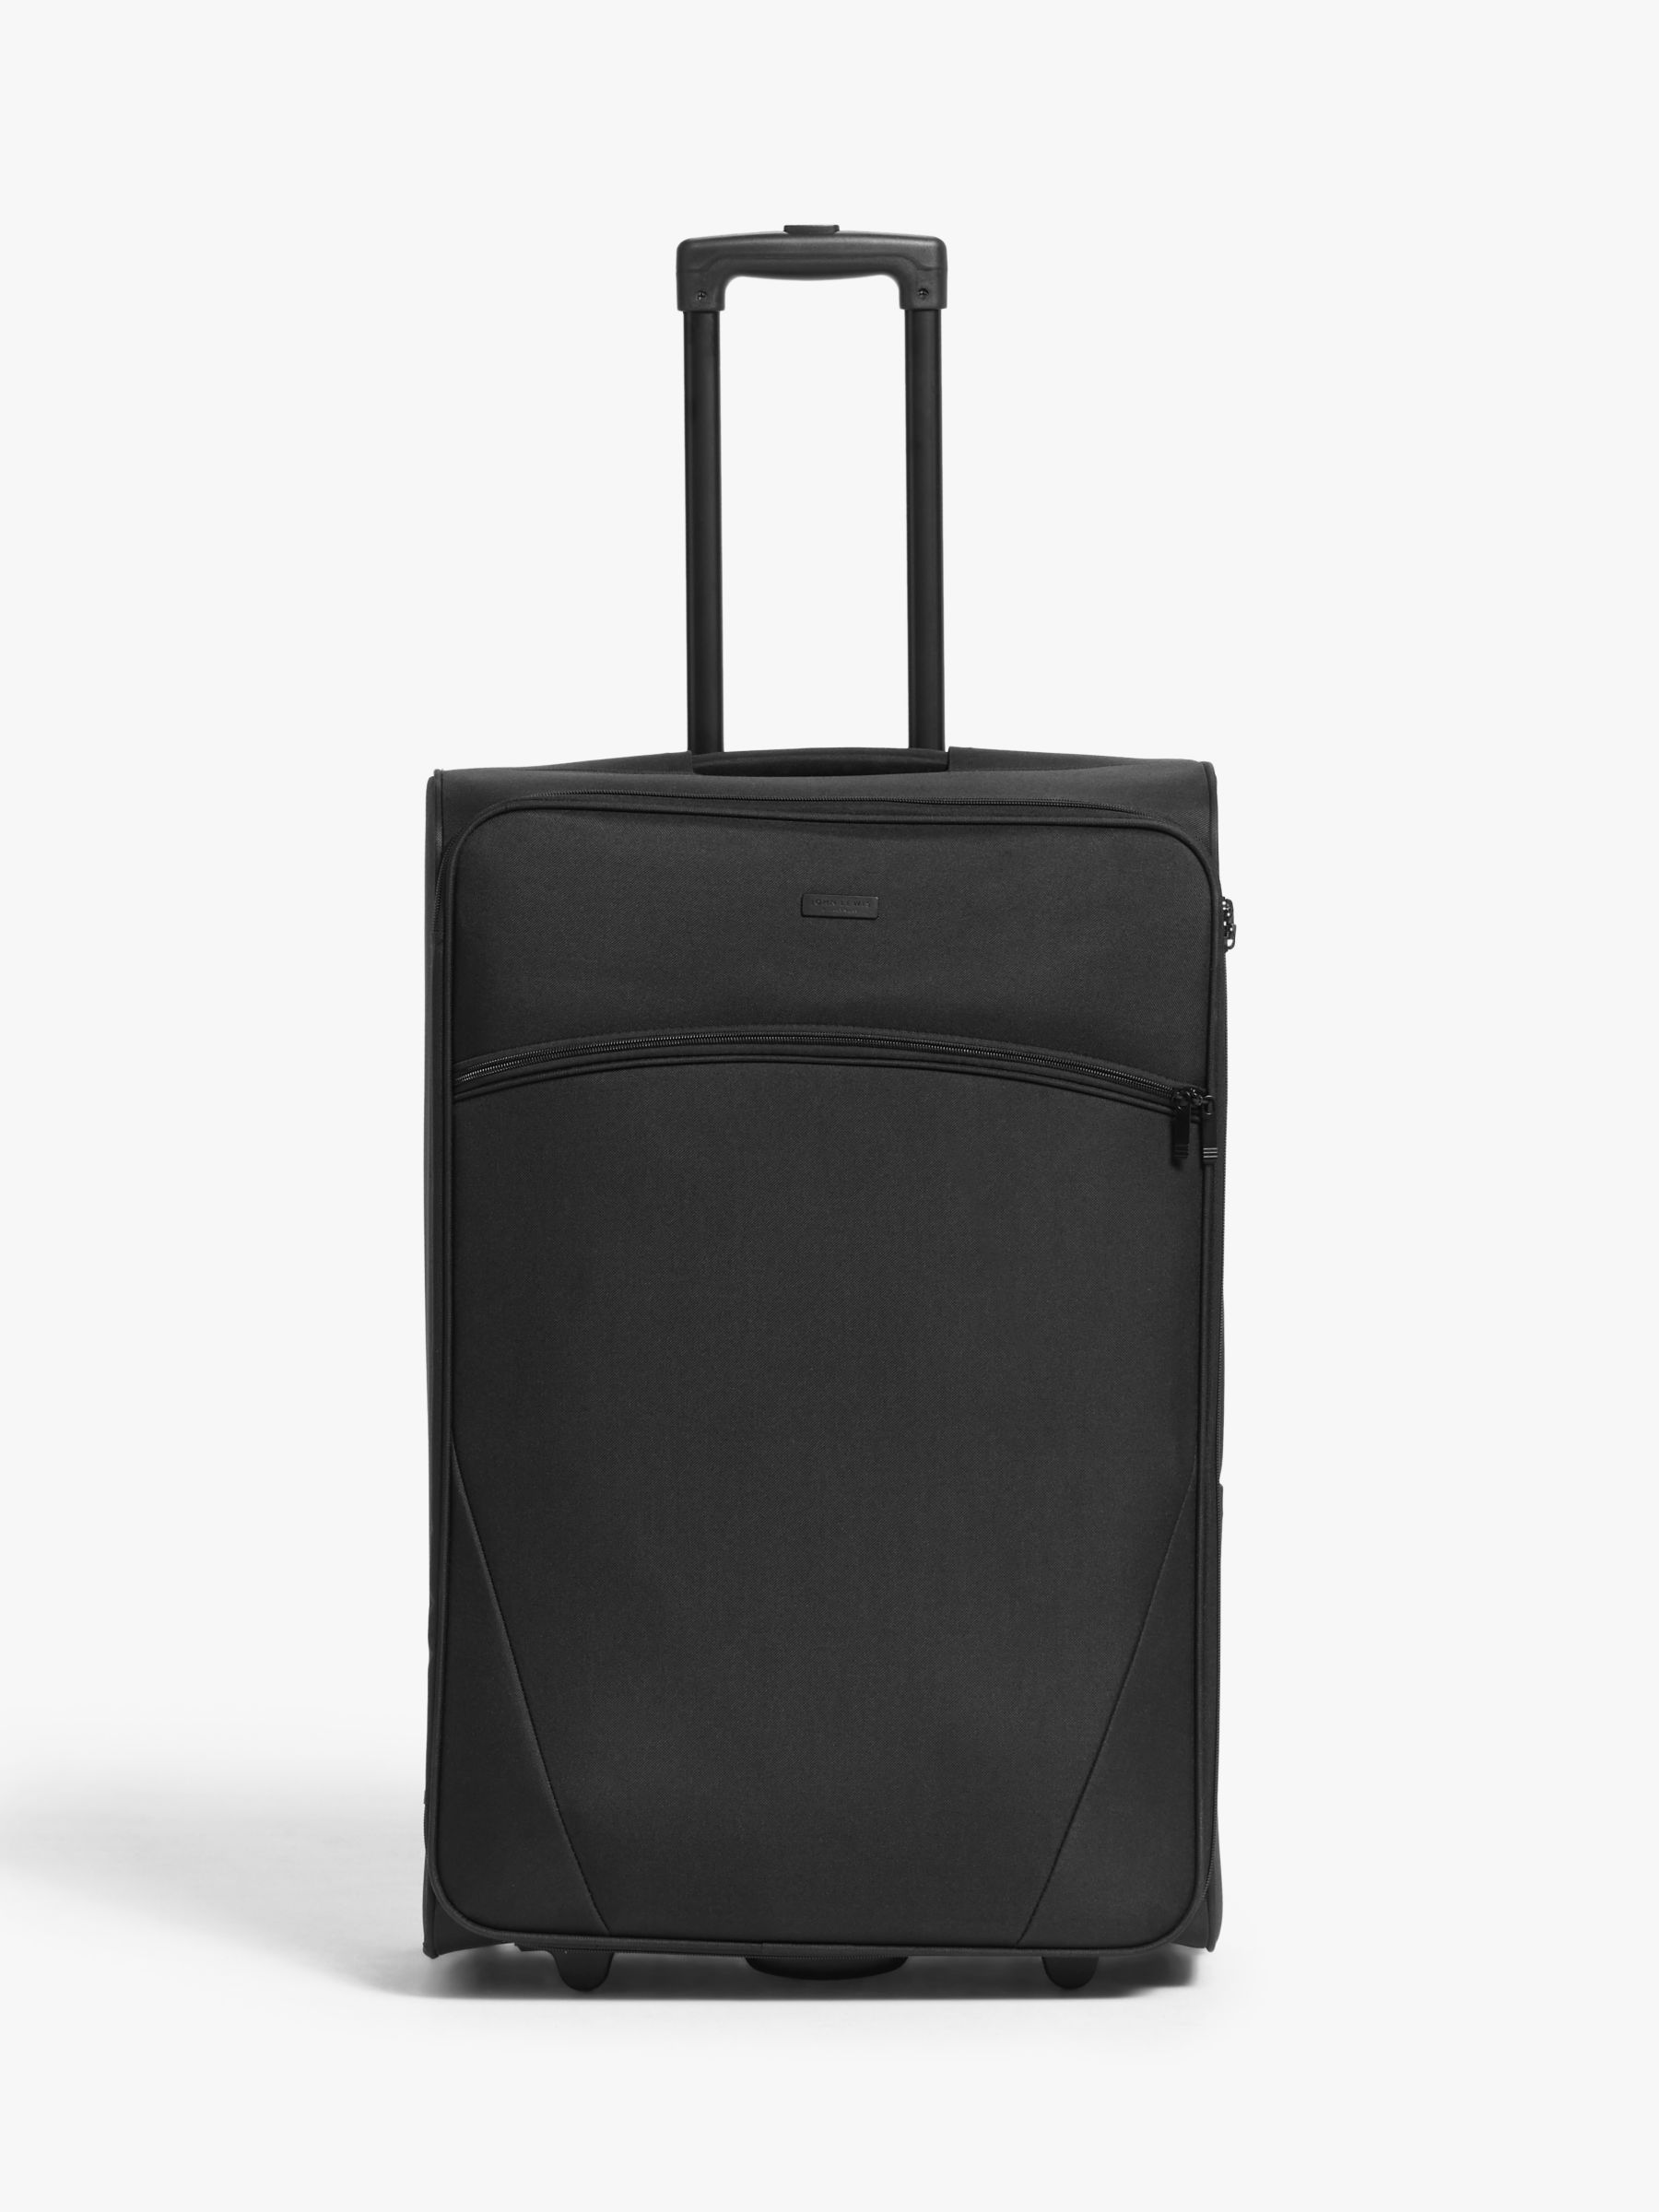 John Lewis & Partners Cannes 73cm 2-Wheel Large Suitcase, Black at John Lewis & Partners